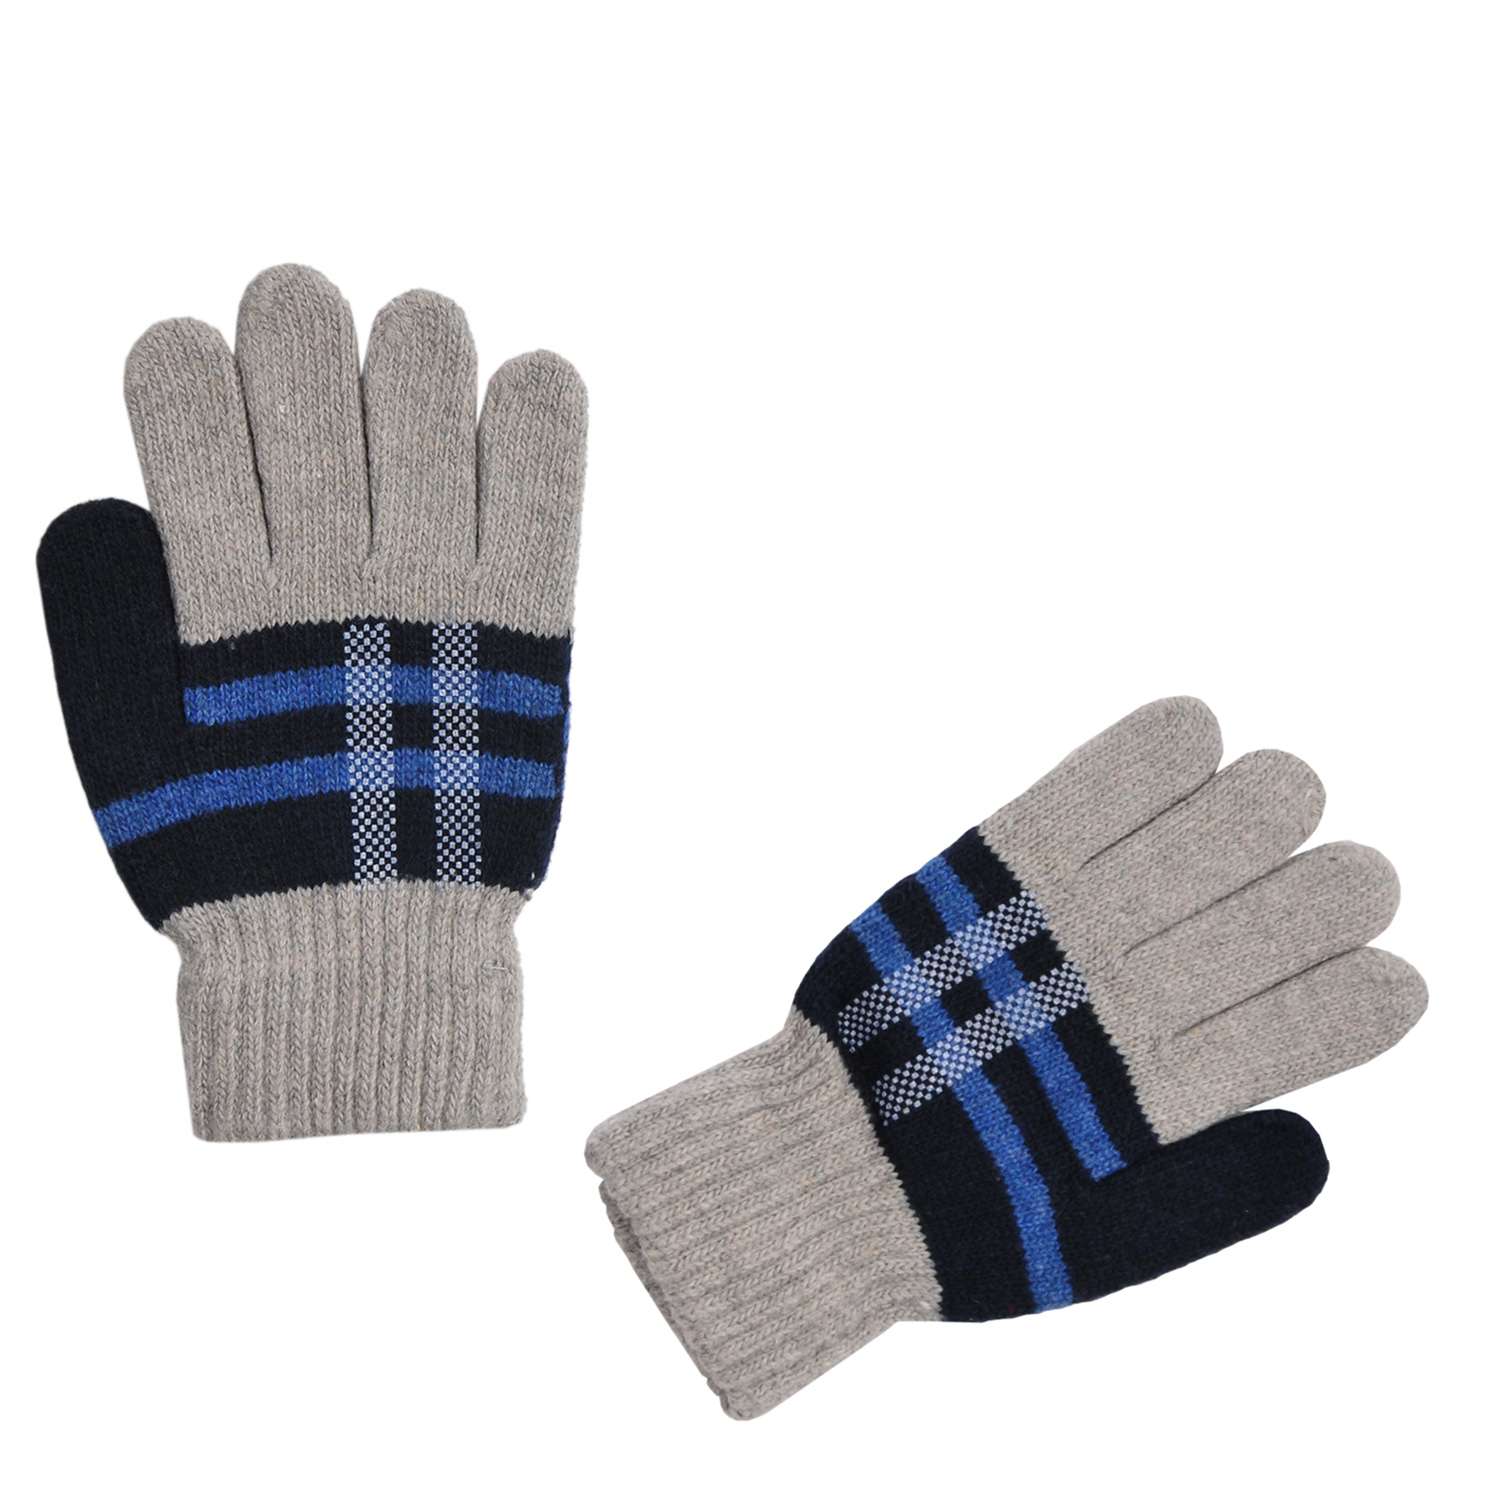 Перчатки S.gloves S 2125-L светло-серый - фото 1